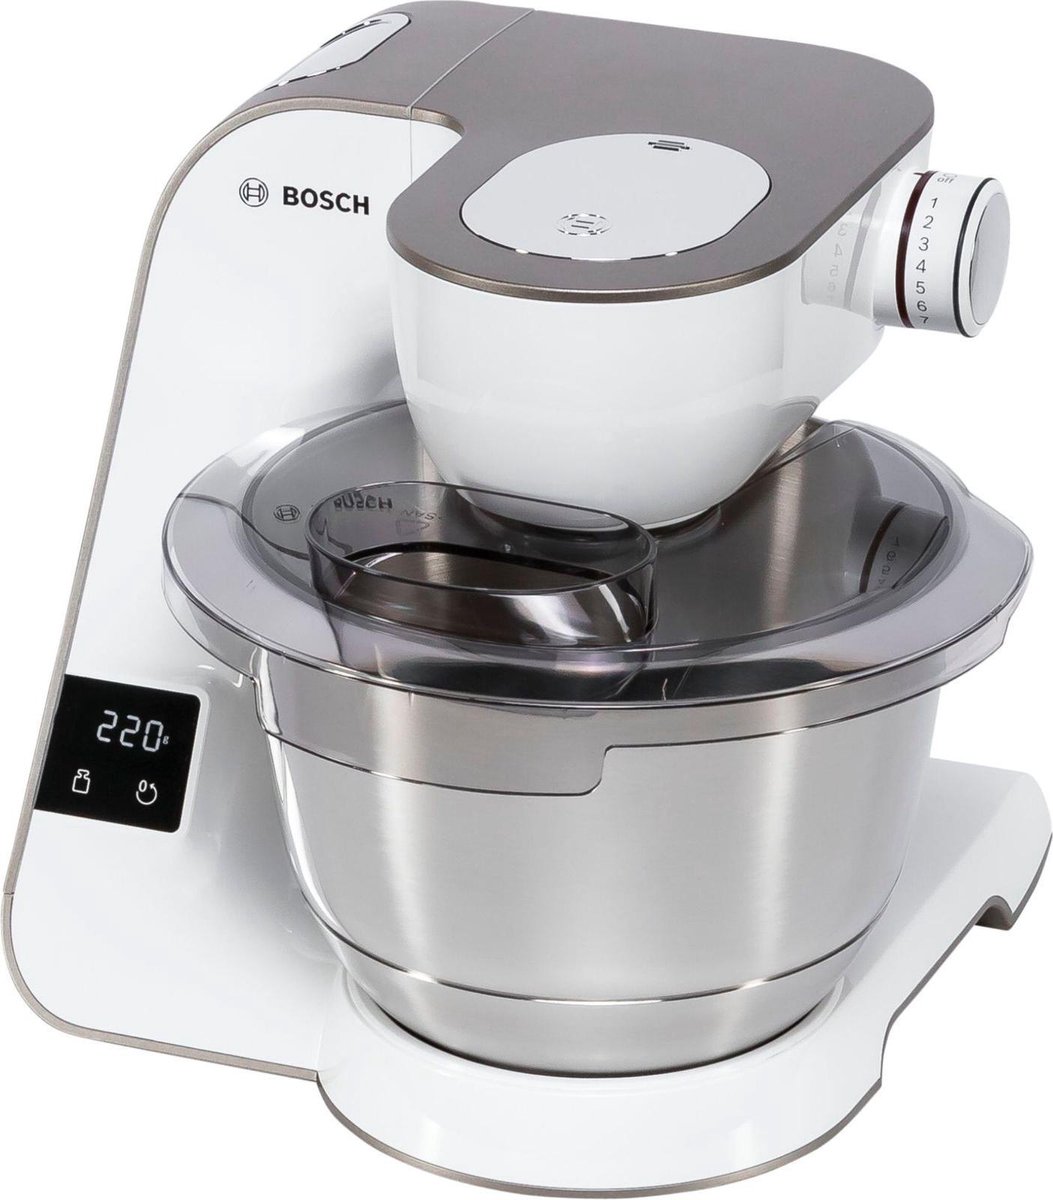 Bosch MUM5 Compacte keukenmachine - Wit | bol.com